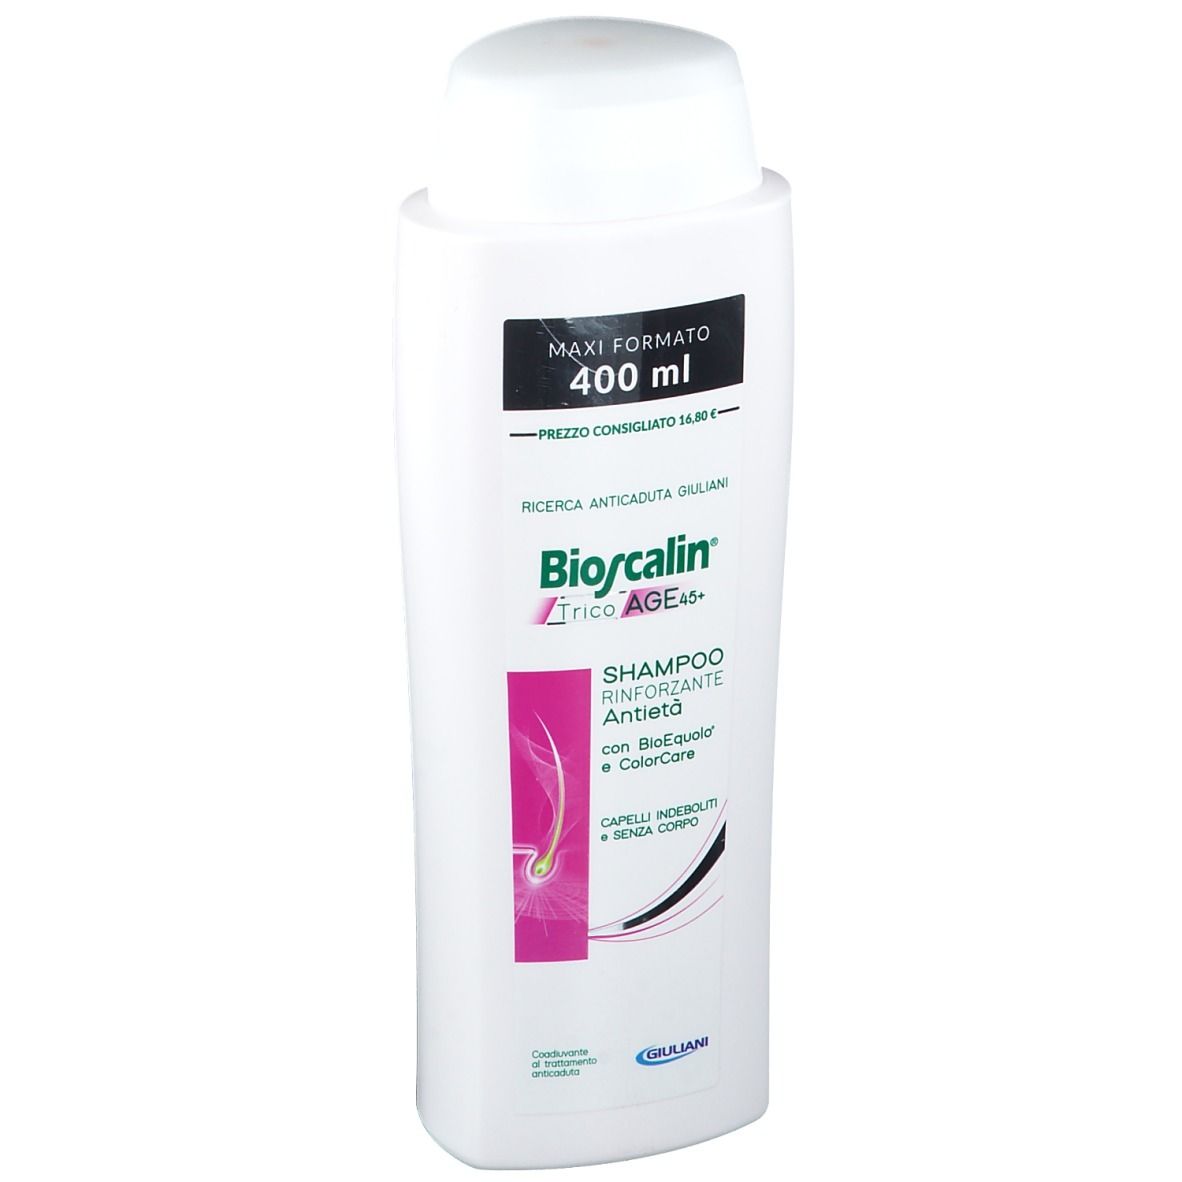 Bioscalin Tricoage 45+ Shampoo 400 ml